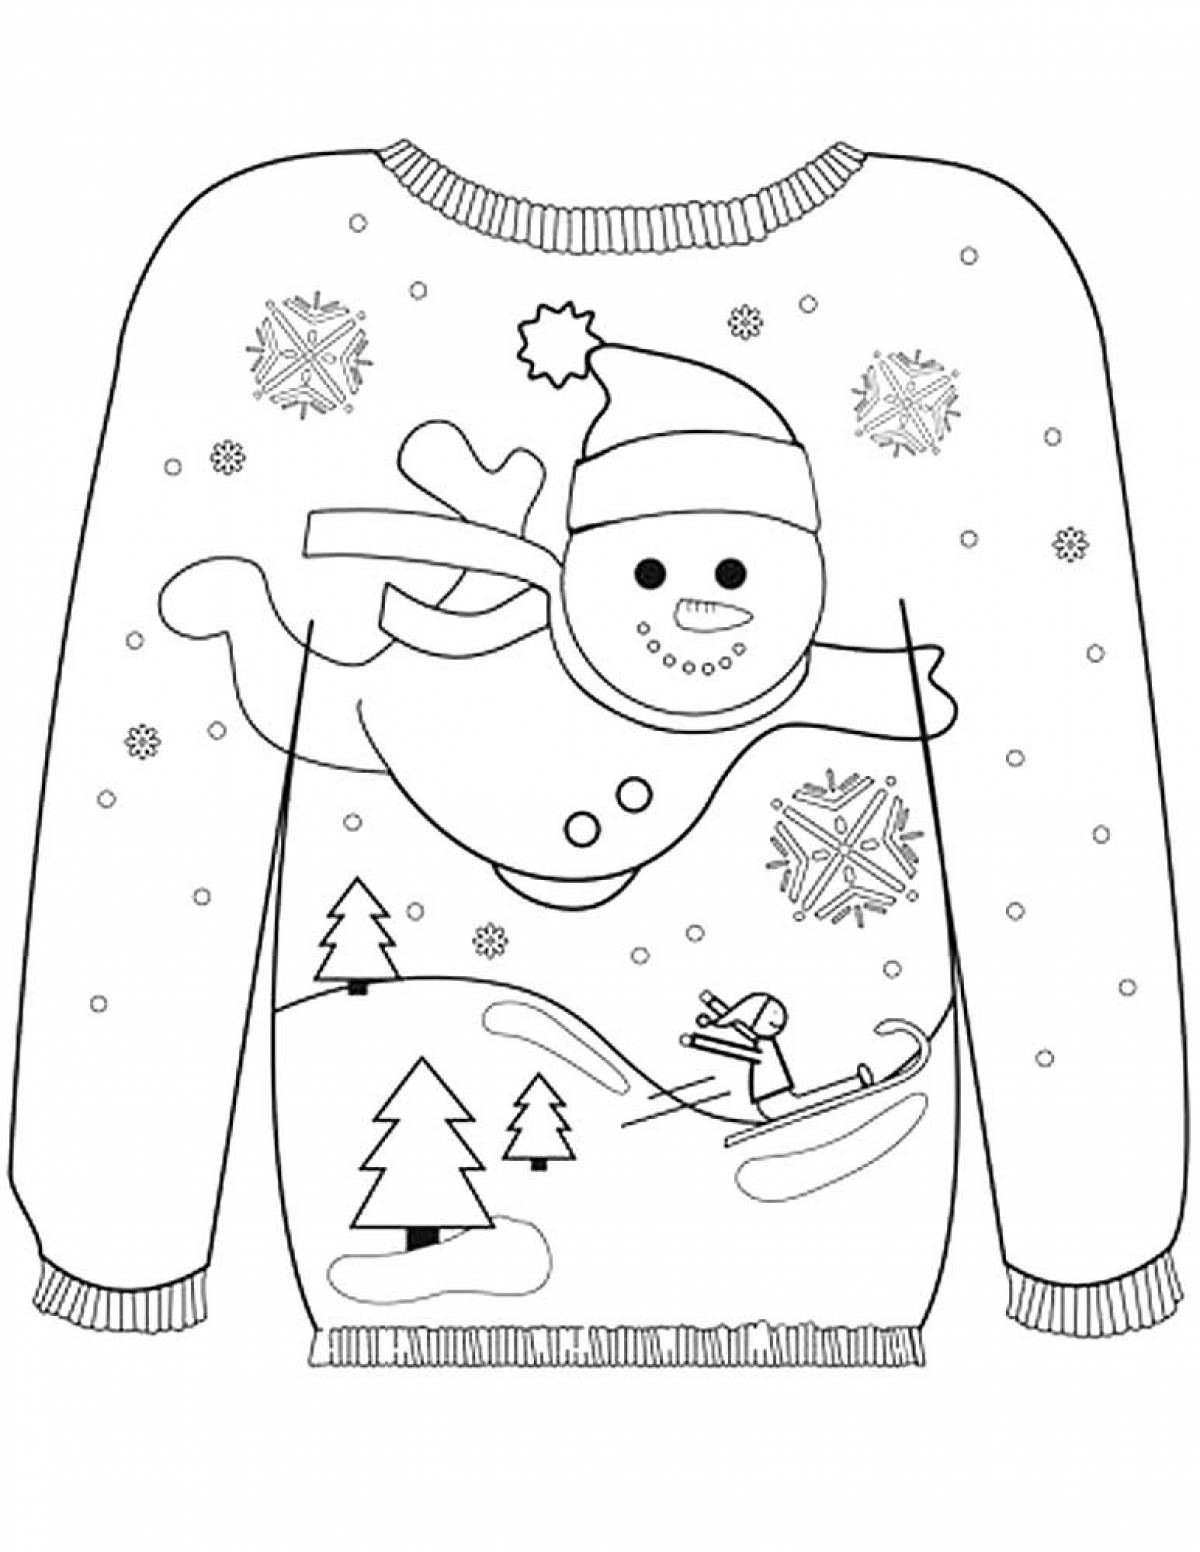 Зимний свитер